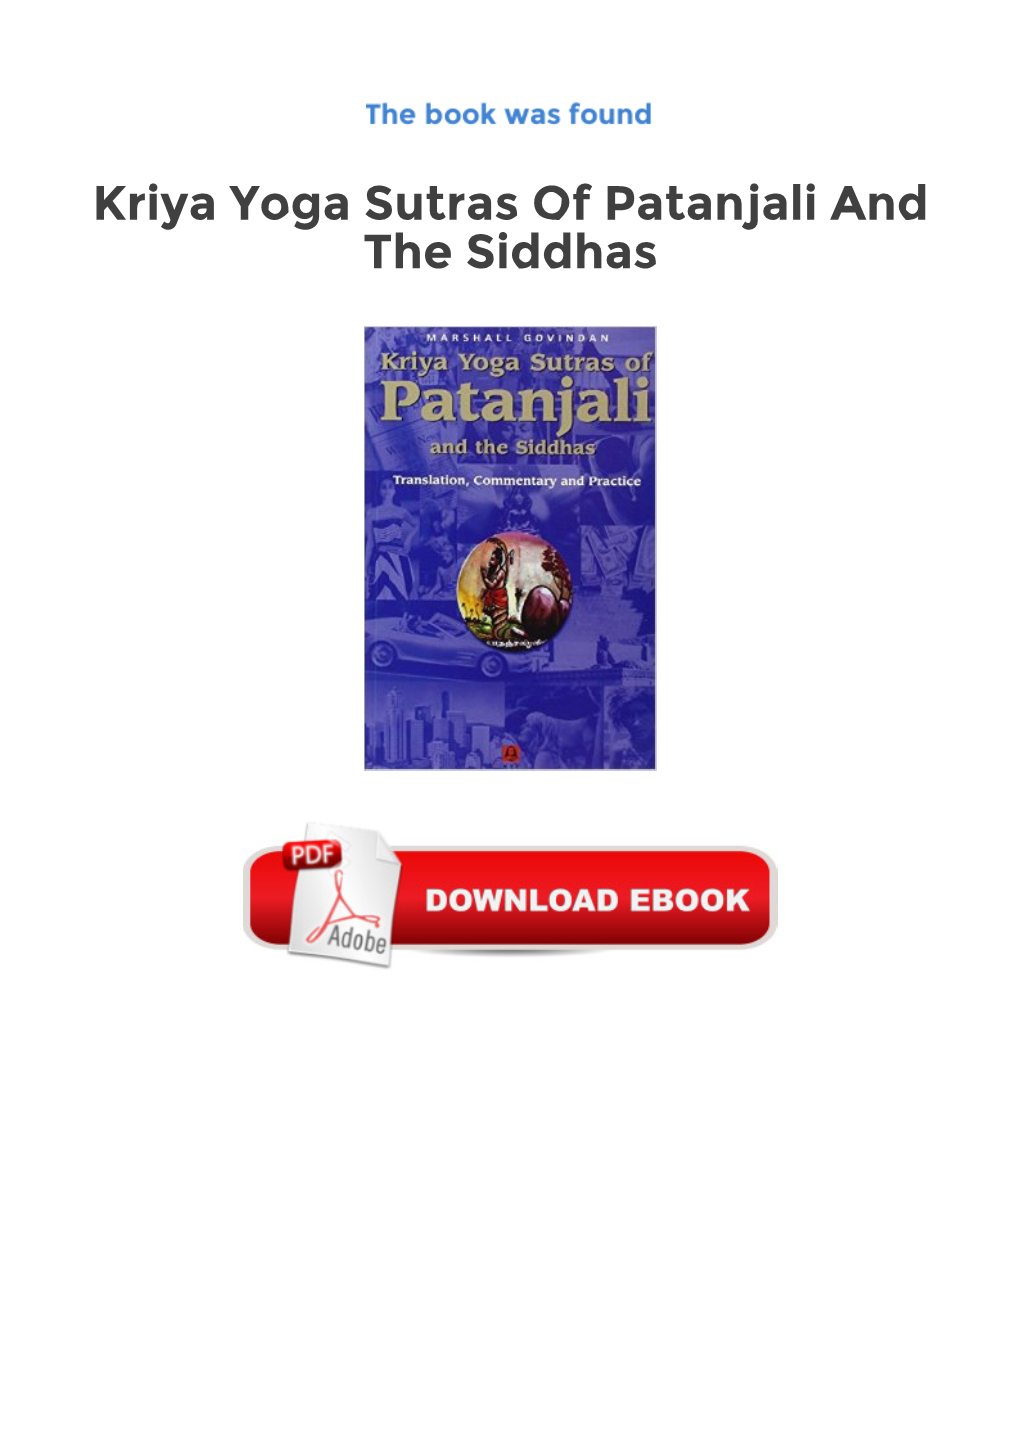 Kriya Yoga Sutras of Patanjali and the Siddhas Ebooks Free